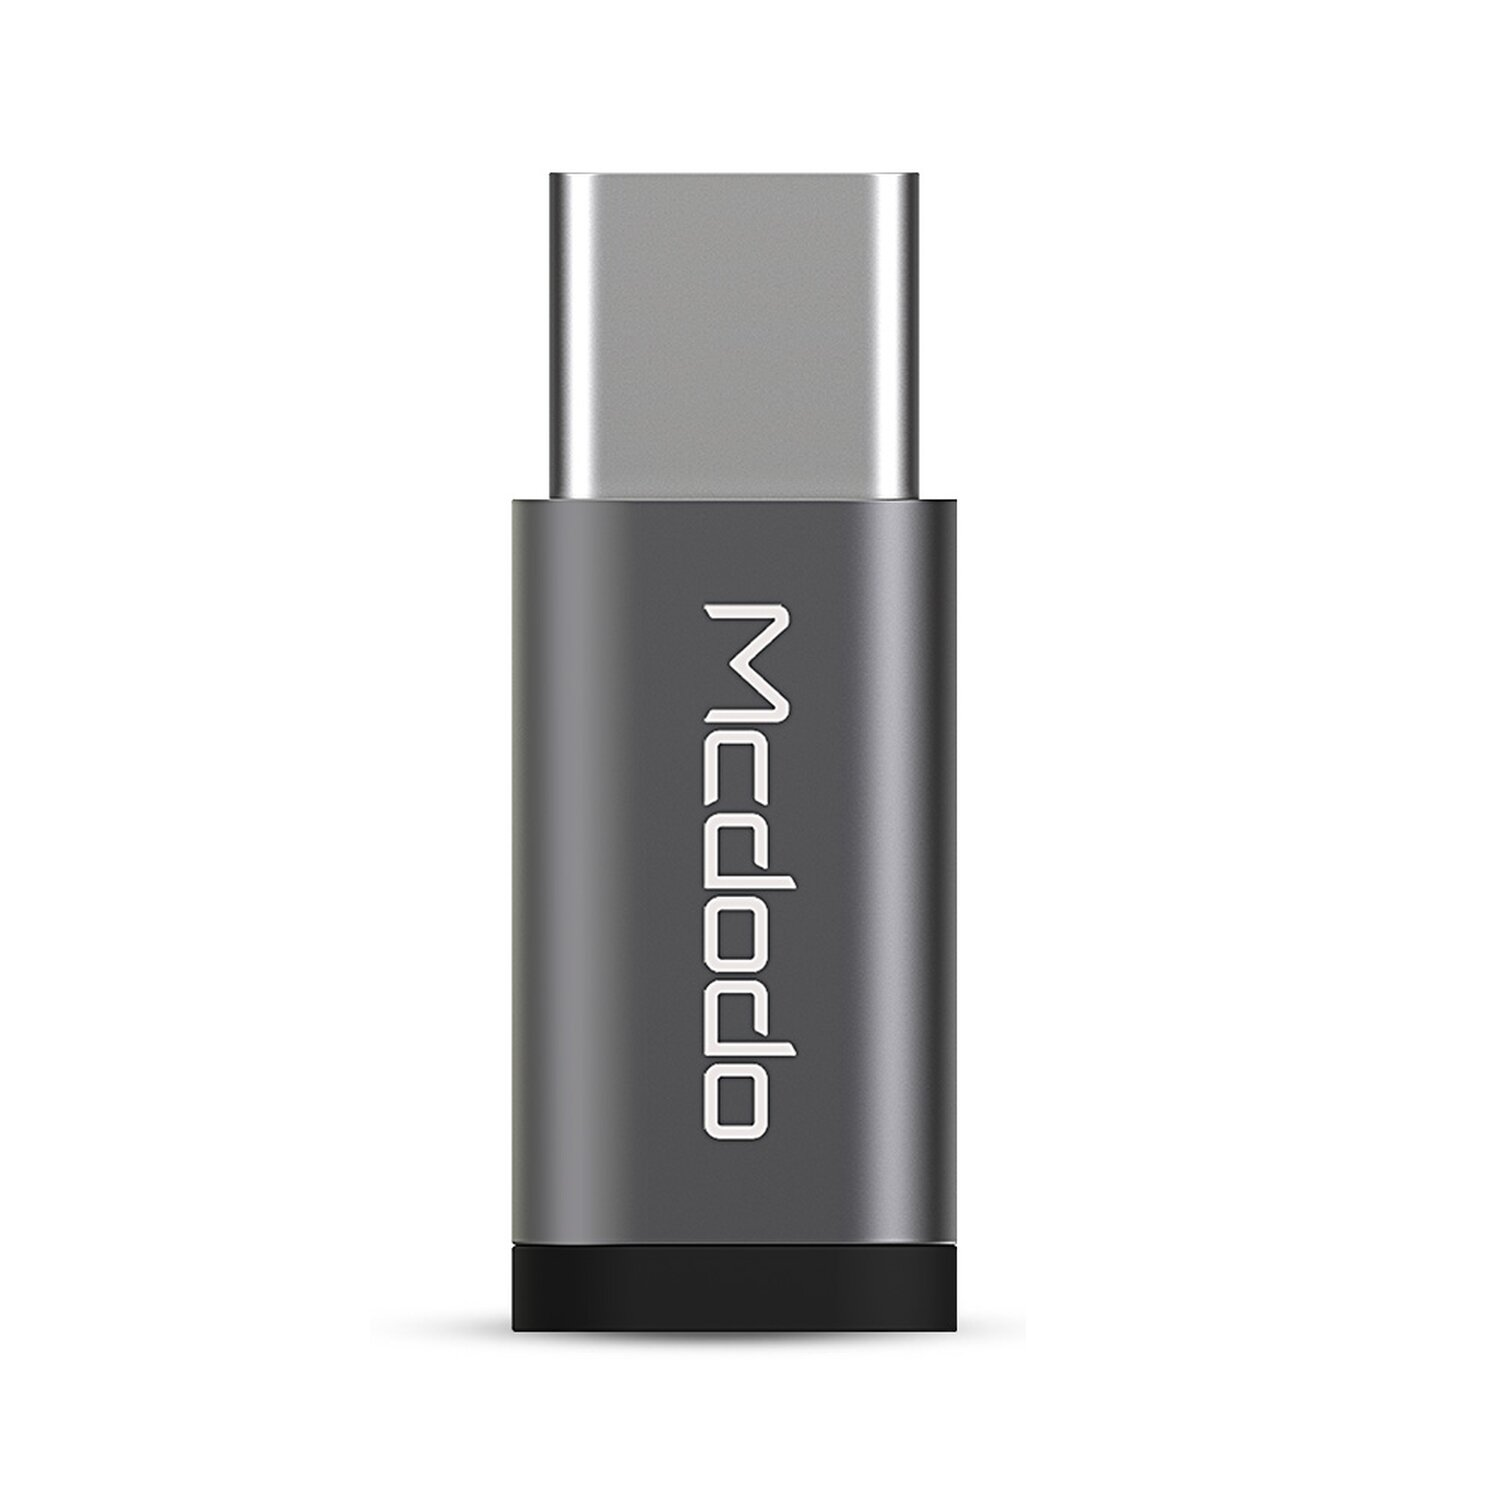 auf MCDODO Typ-C Micro-USB Kabeladapter